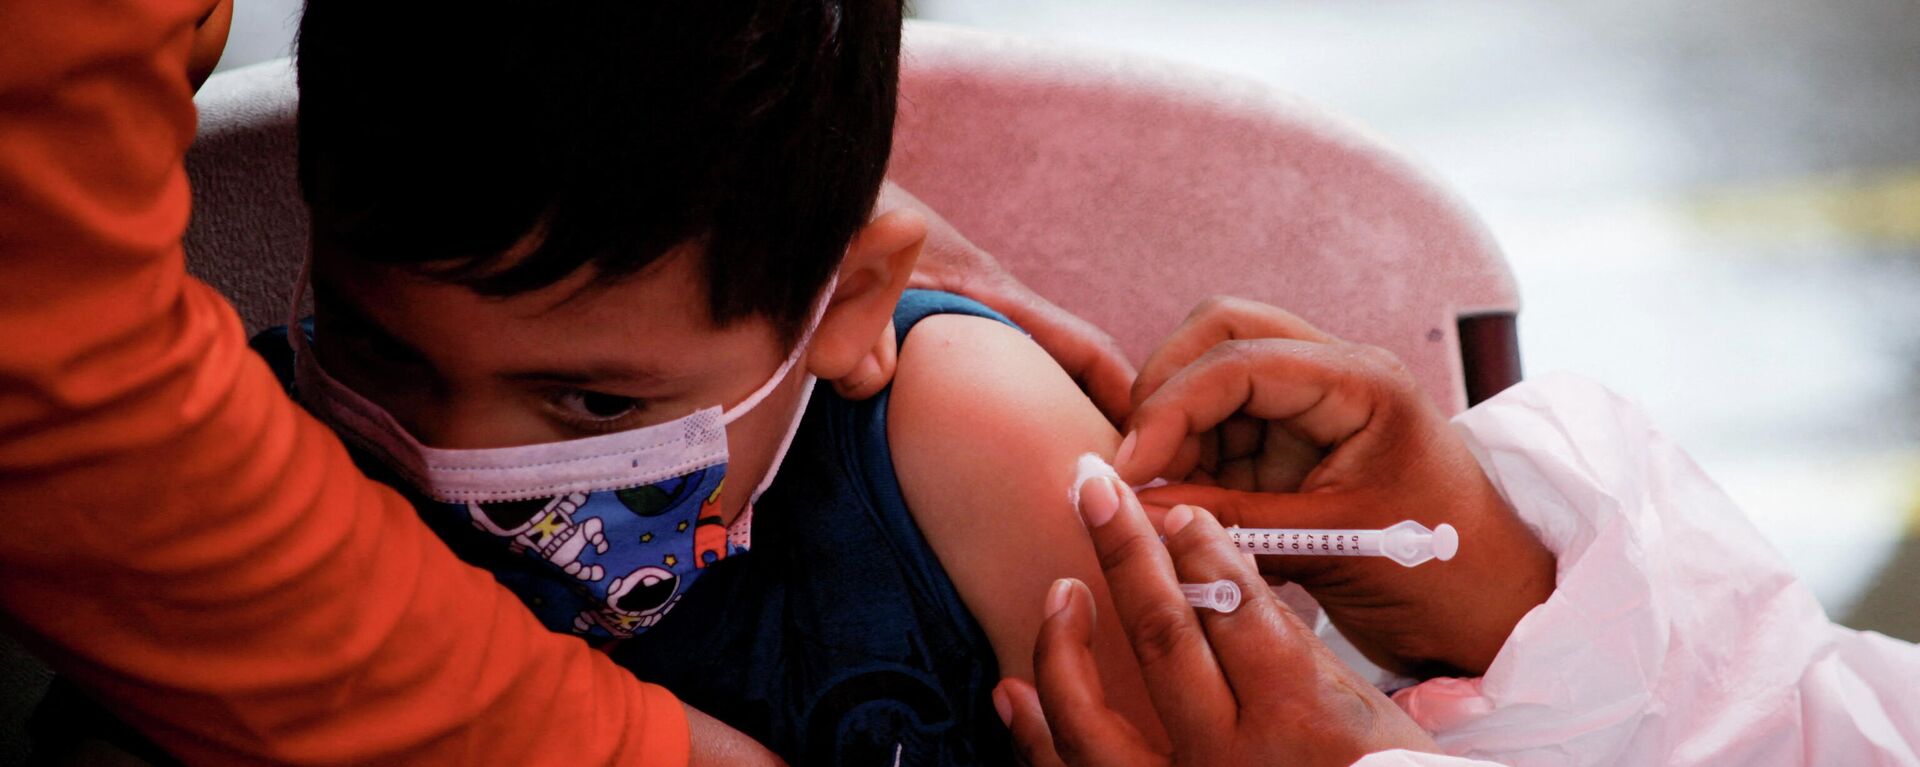 Honduras vaccinate children aged 5-11 for COVID-19, in Tegucigalpa - Sputnik International, 1920, 16.02.2022